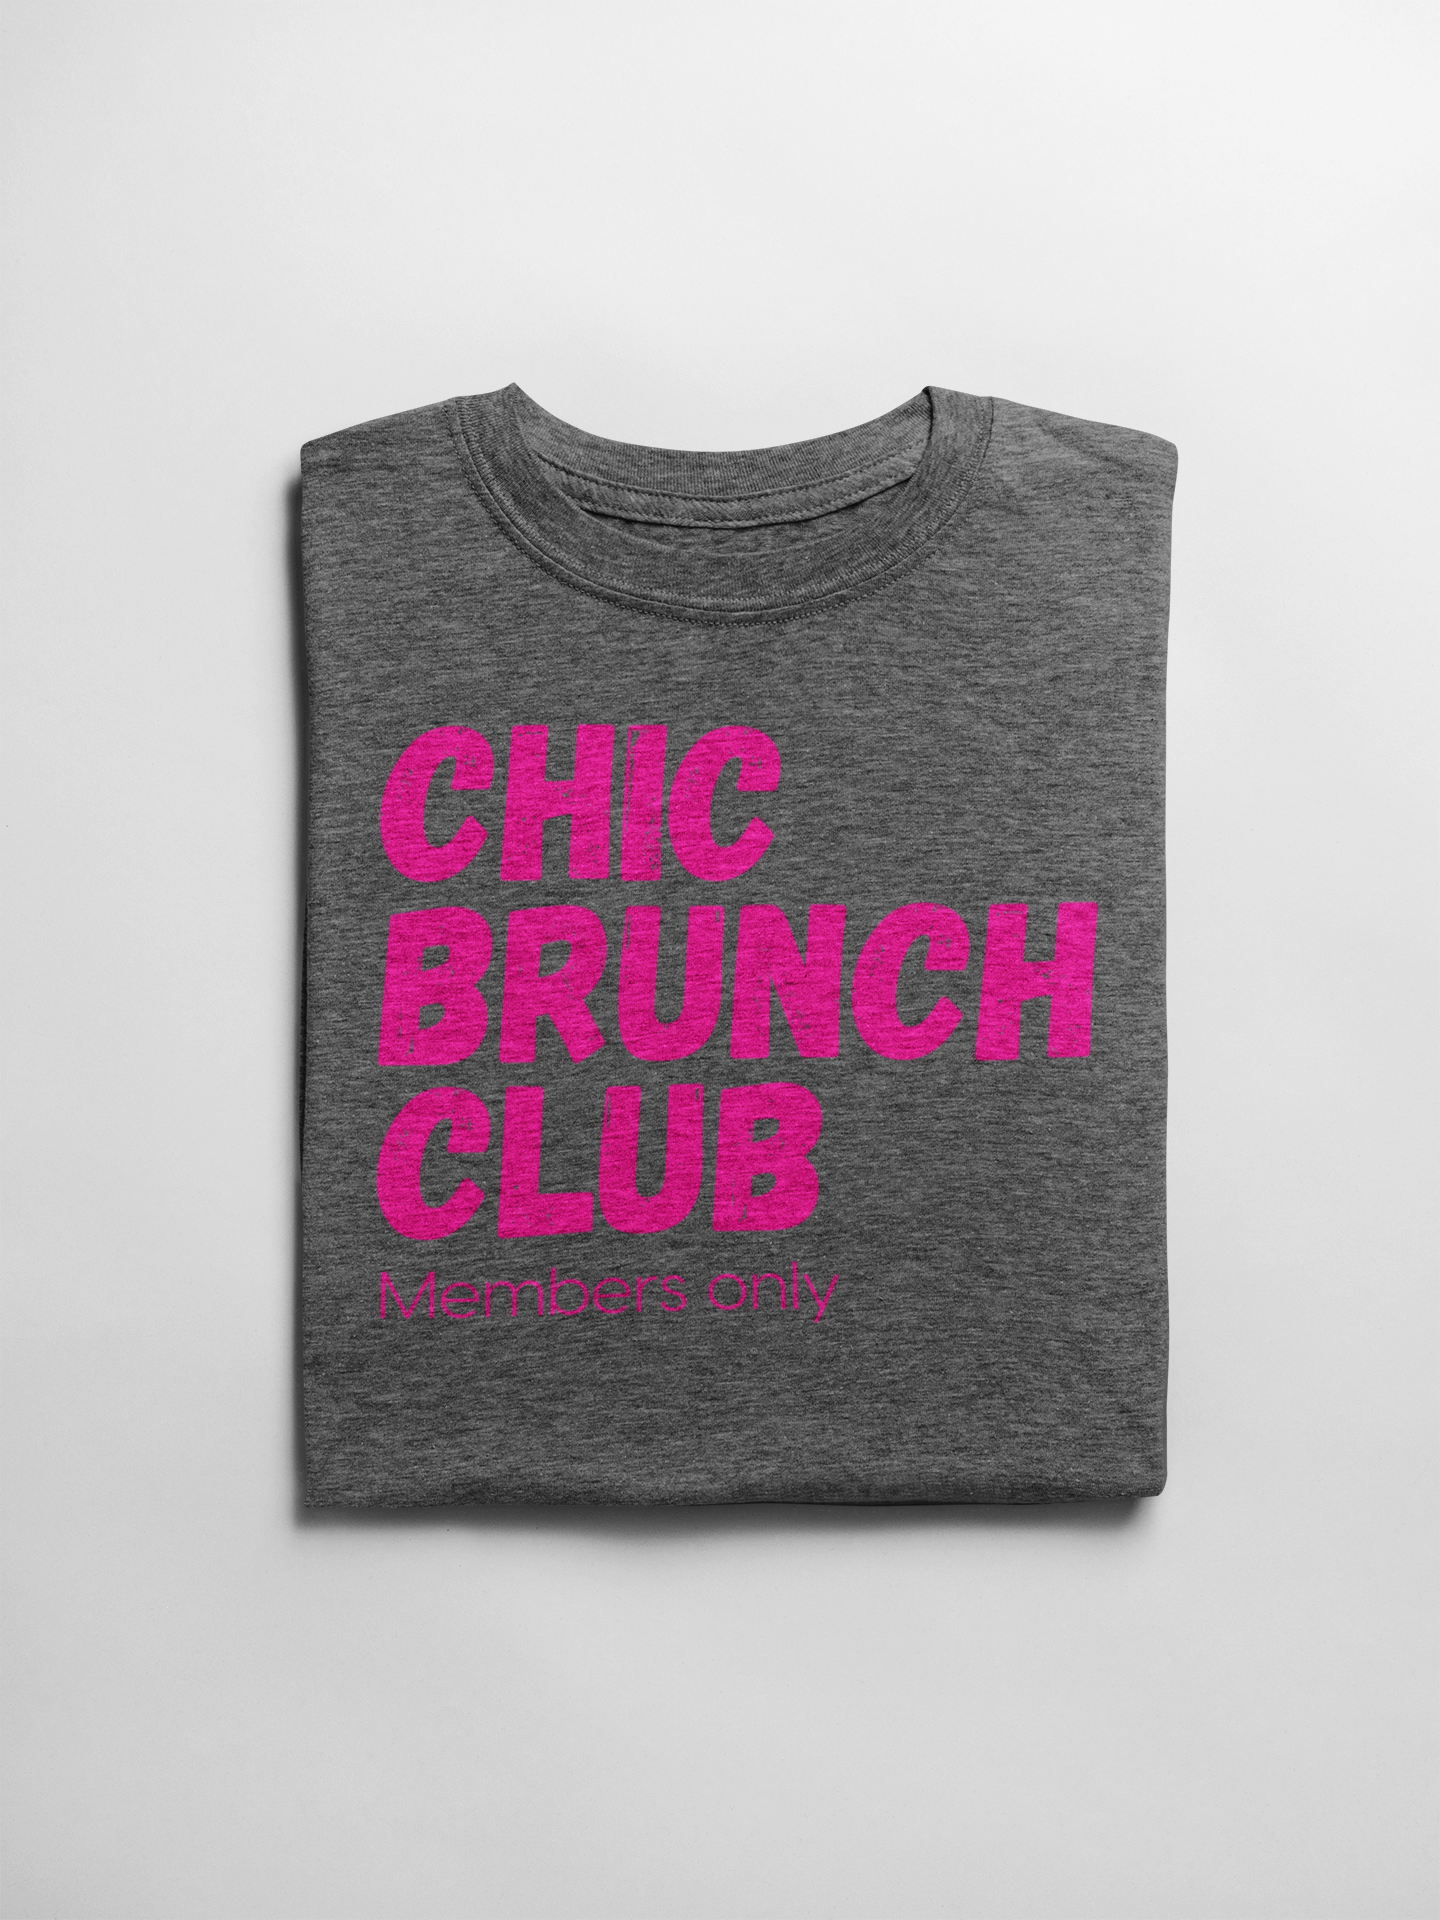 Chic Brunch Club Tee